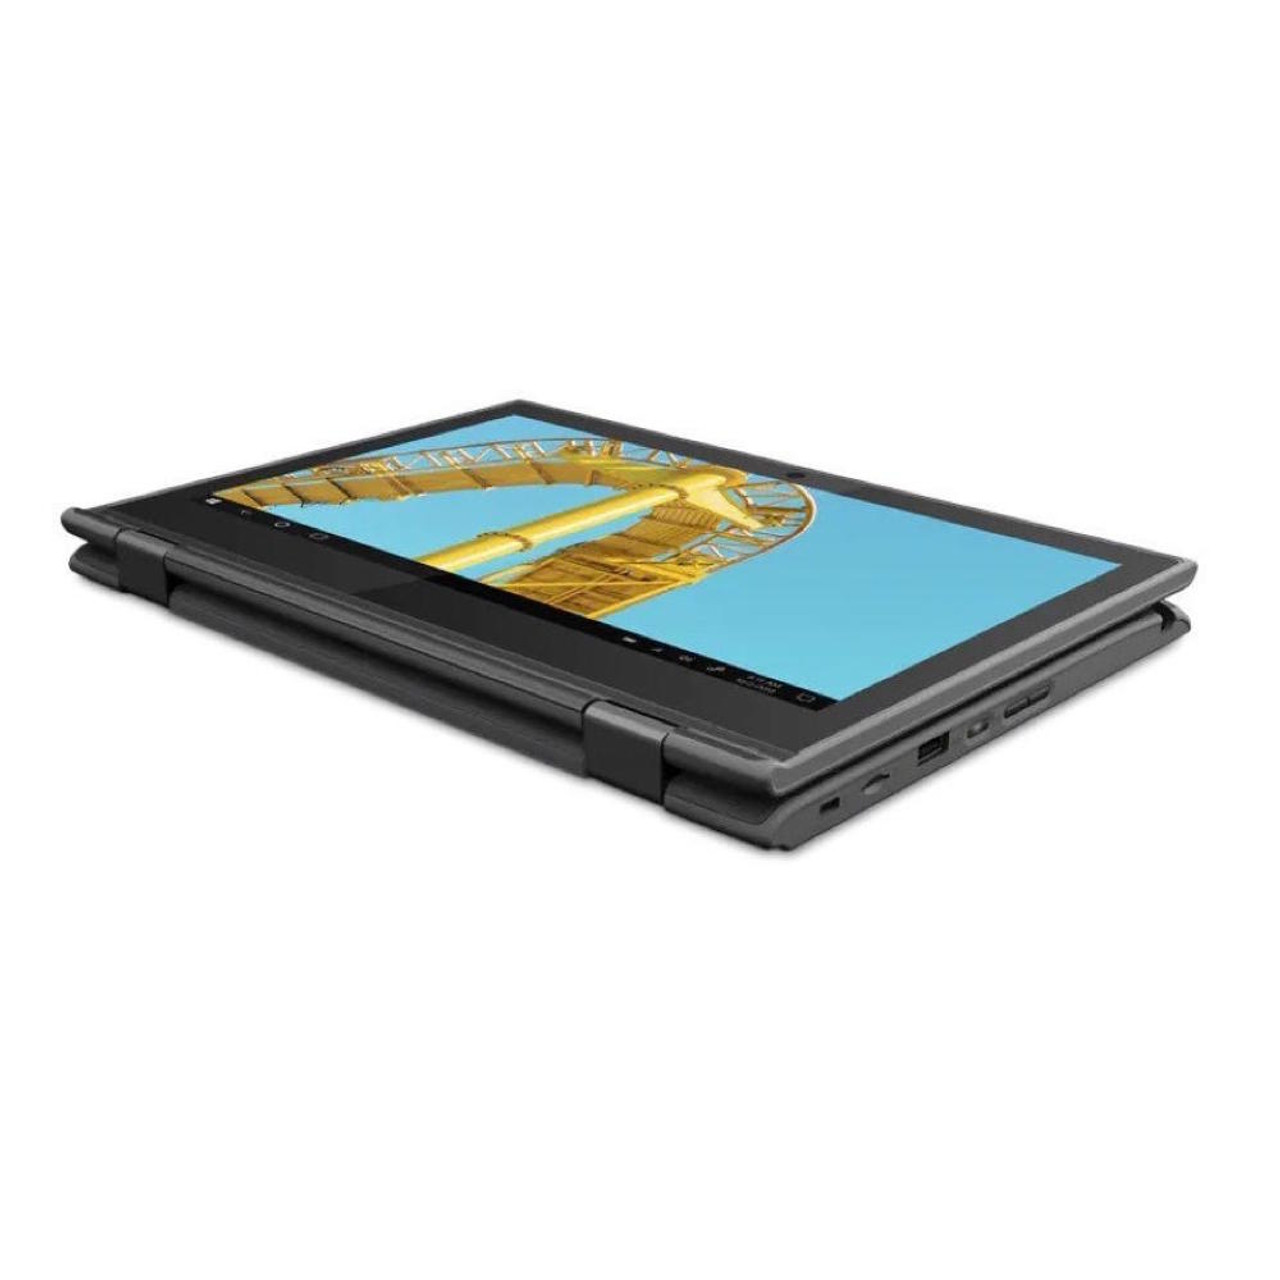 Lenovo 300E G2 11.6" Touch Laptop Intel Celeron N4120 4GB RAM 128GB SSD W10P | 81M9007EUS | Manufacturer Refurbished